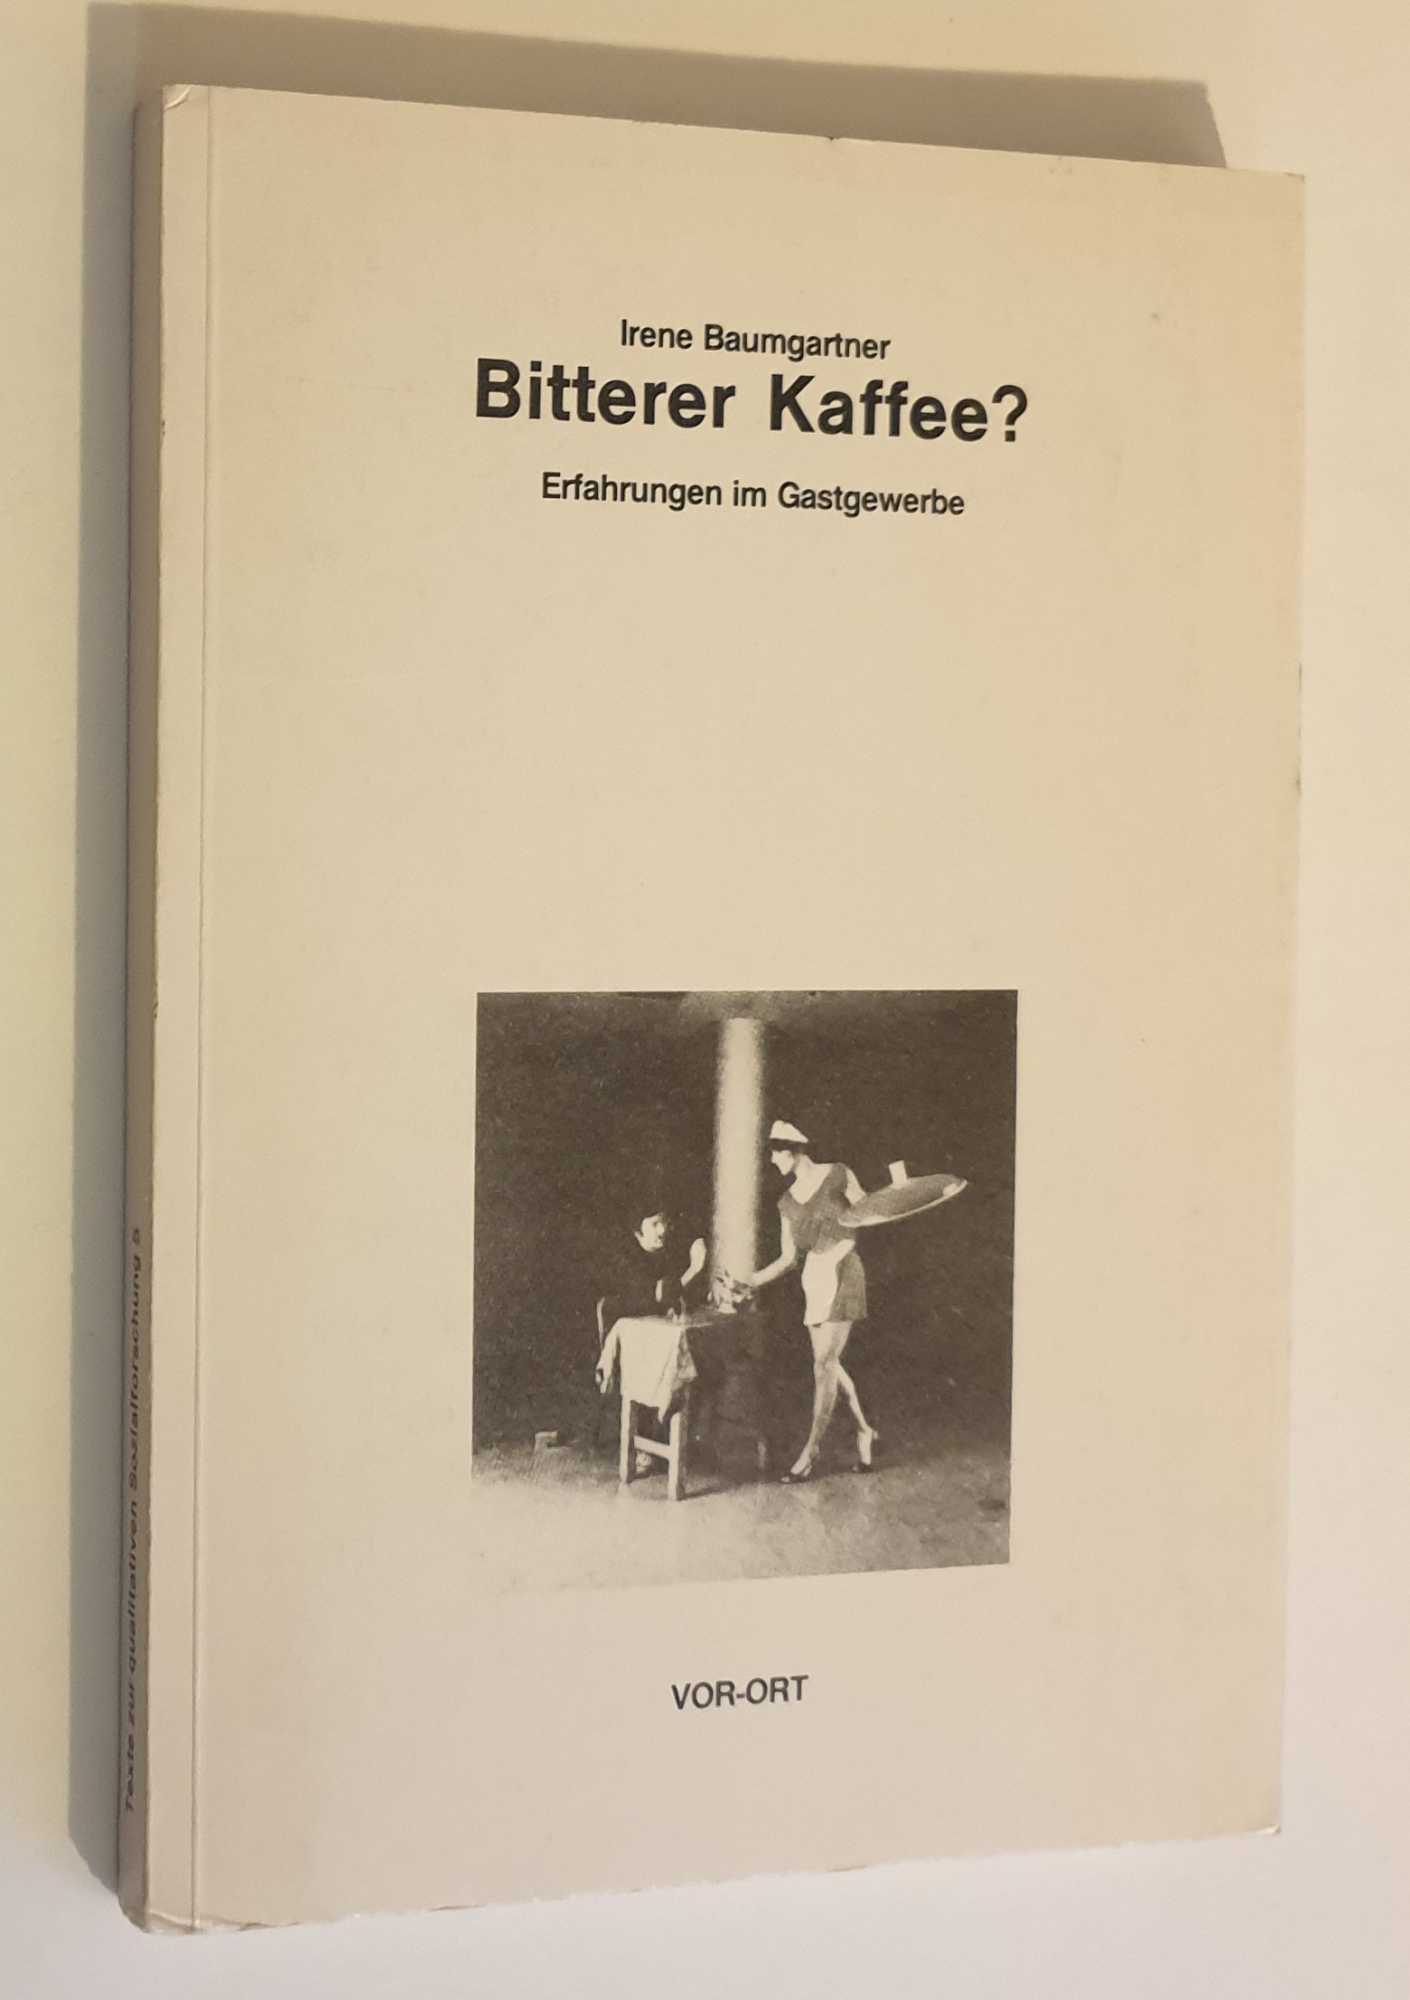 Bitterer Kaffee? - Erfahrungen im Gastgewerbe - Baumgartner, Irene